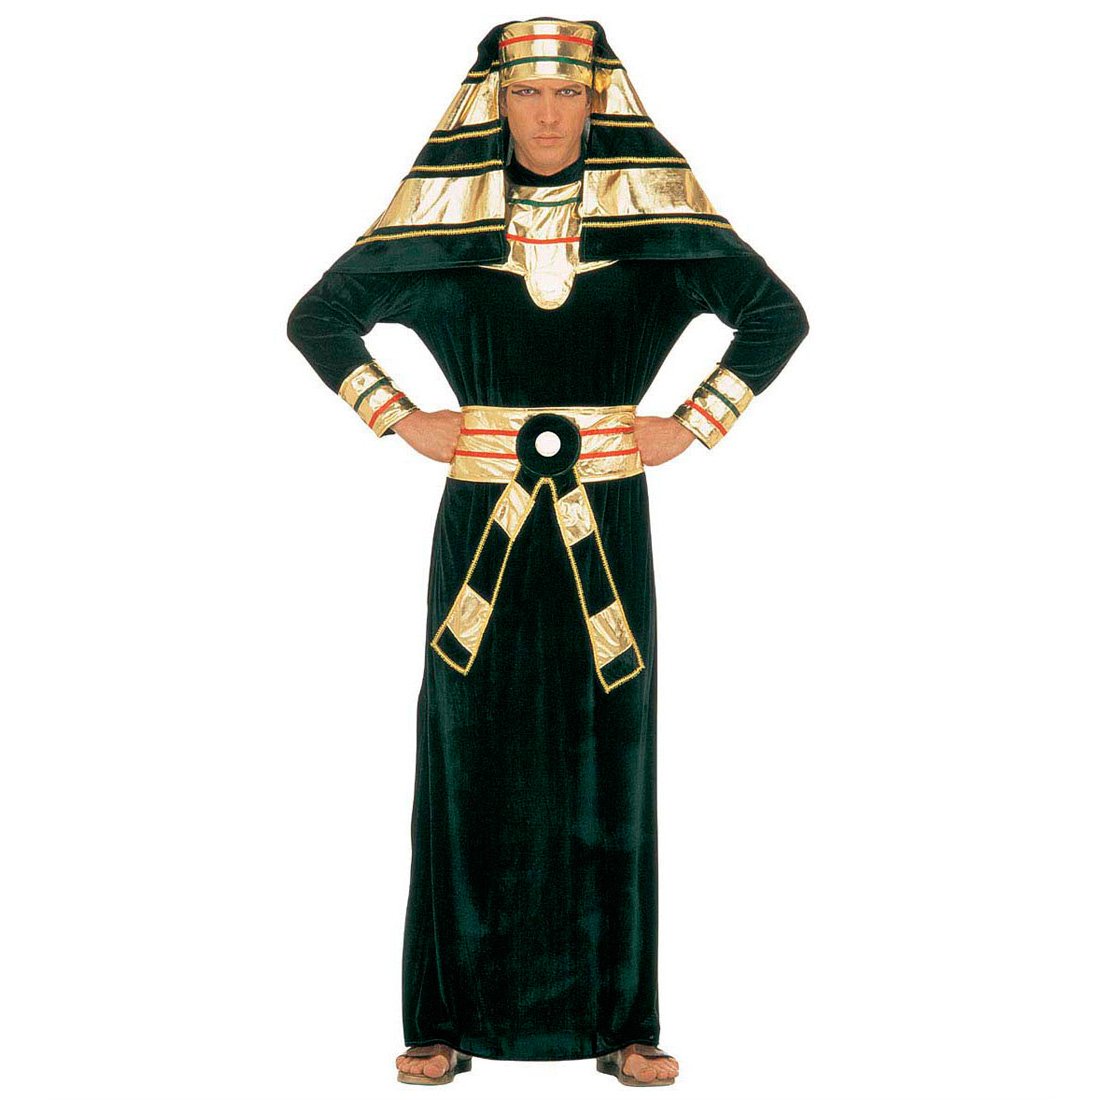 Ägyptischer Pharao Kostüm Ägypter Herrenkostüm Samt L 52 Pharaonenkostüm König Gewand Königskostüm Fasching Pharaonen Faschingskostüm Ramses Cheops Ägypten Karnevalskostüm Orient Antike Mottoparty